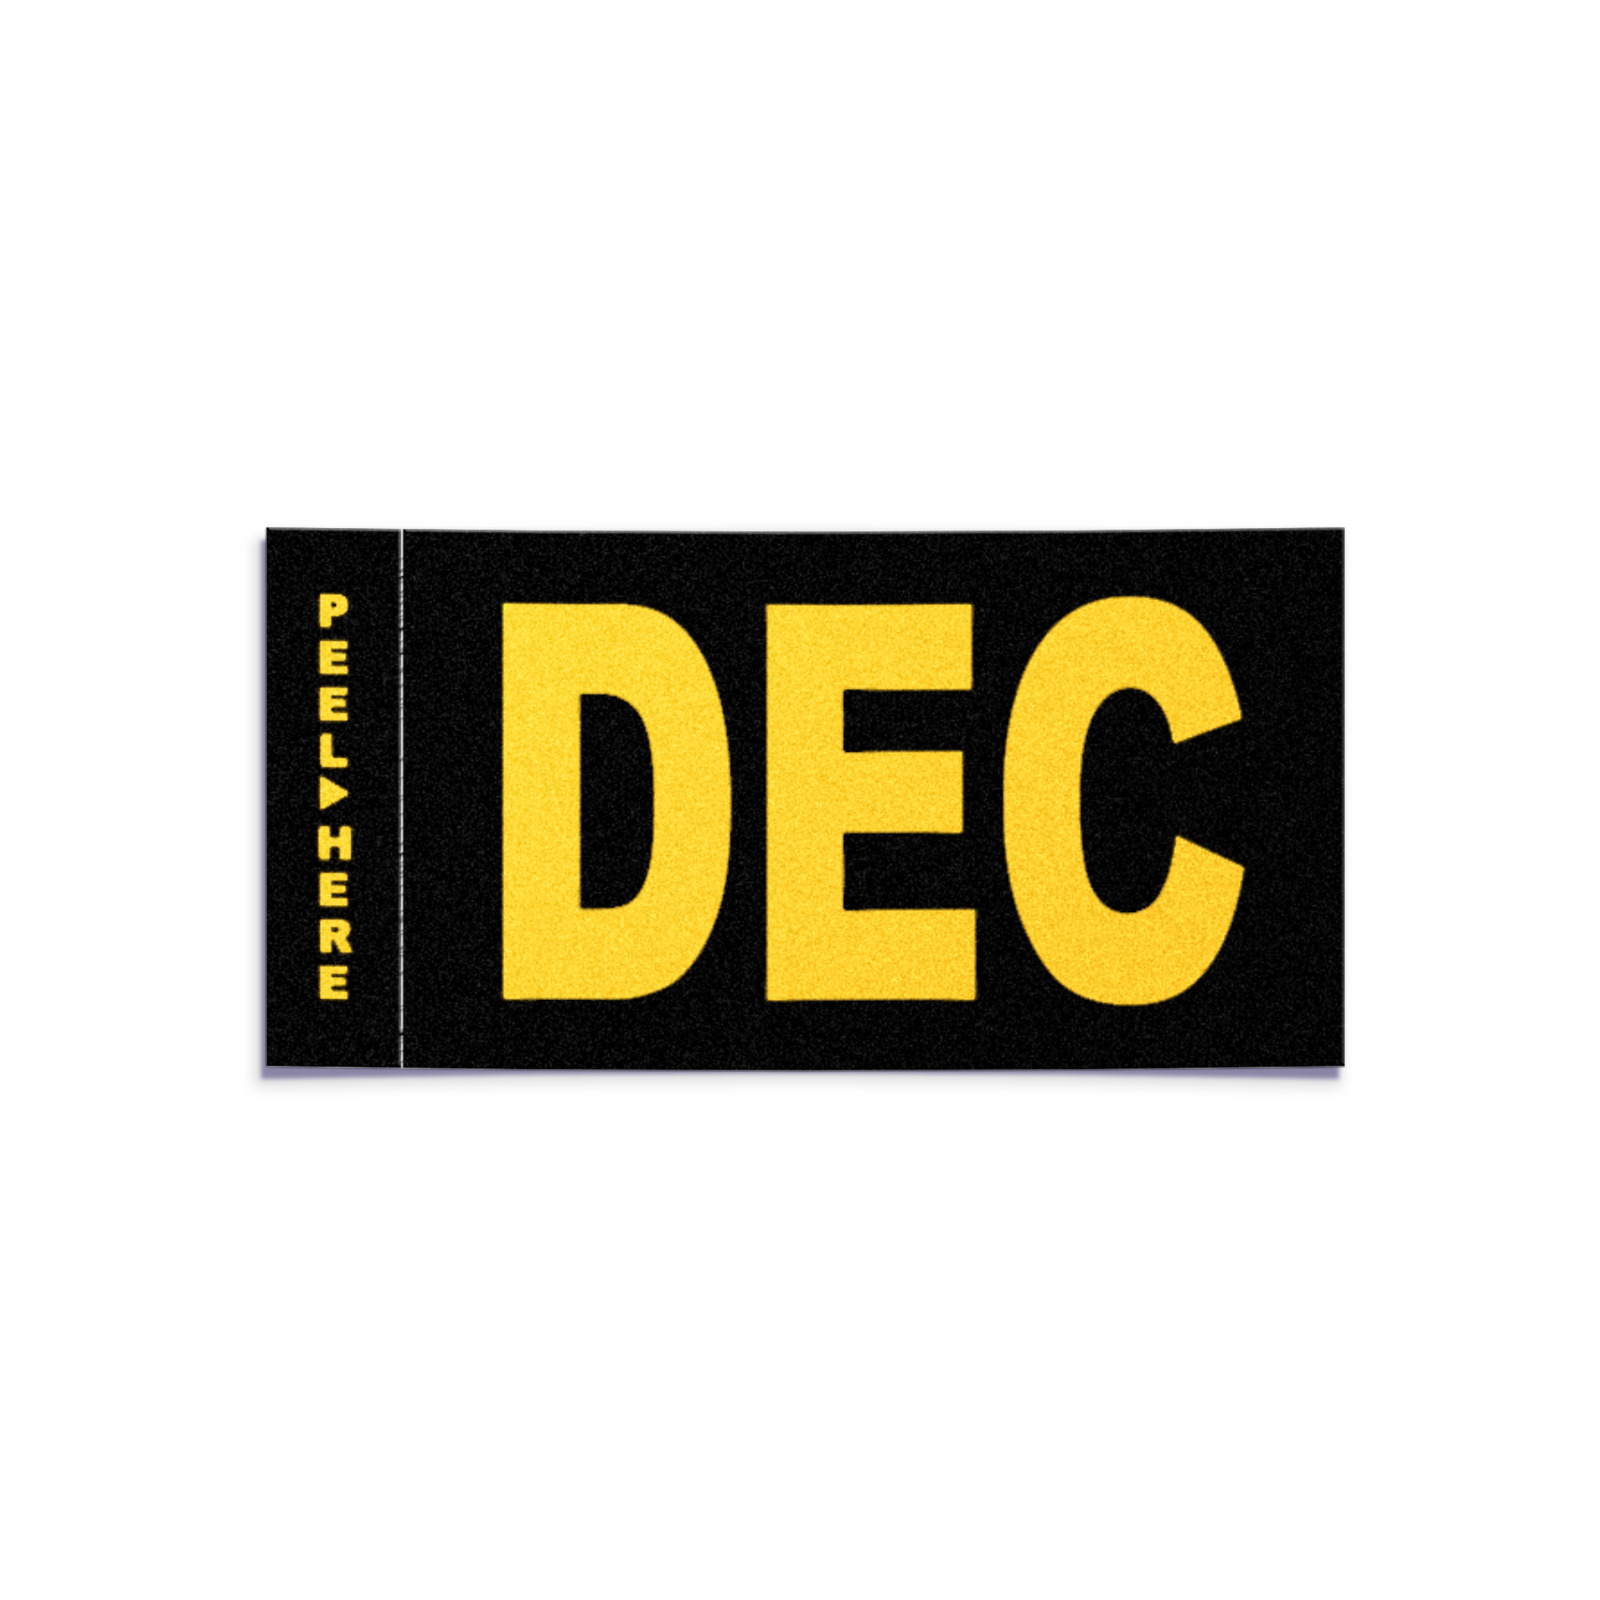 DECEMBER - California License Plate - Legacy Black Yellow Month Sticker DMV Tag